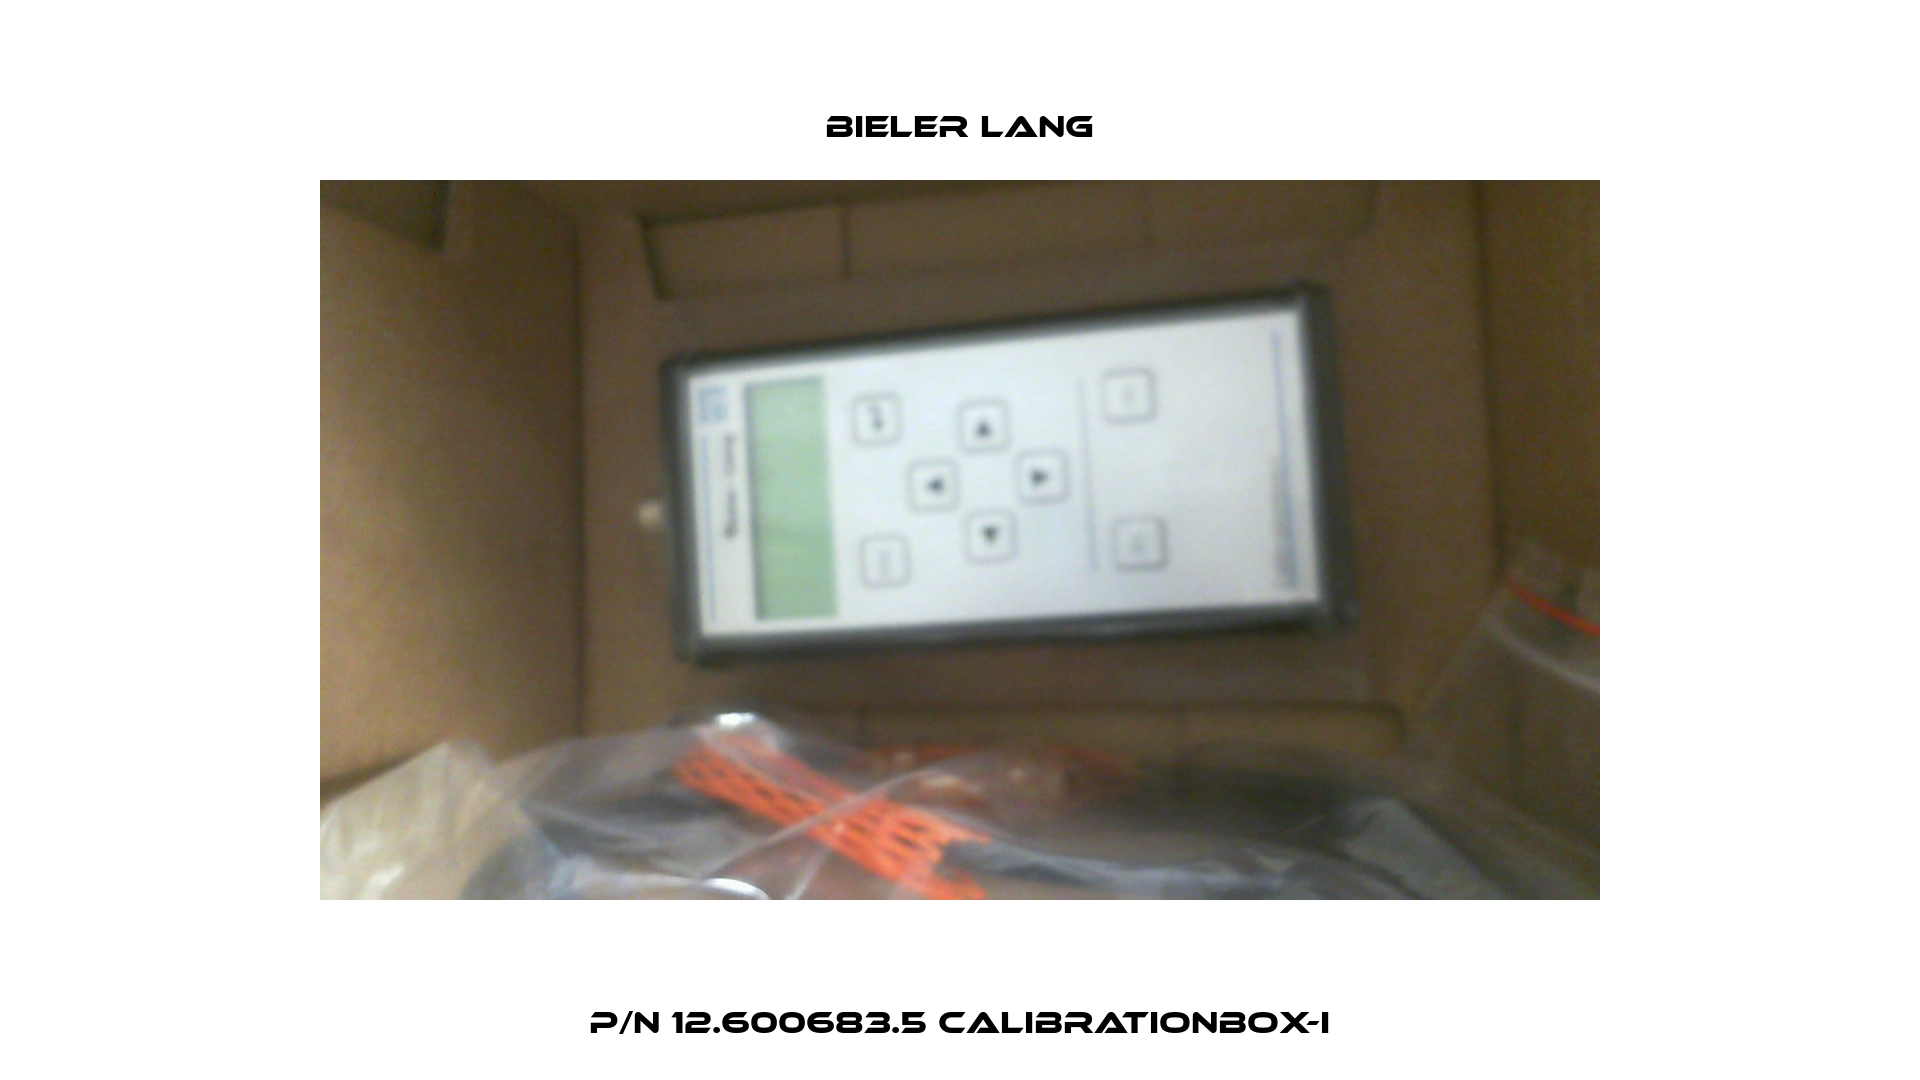 p/n 12.600683.5 Calibrationbox-I Bieler Lang